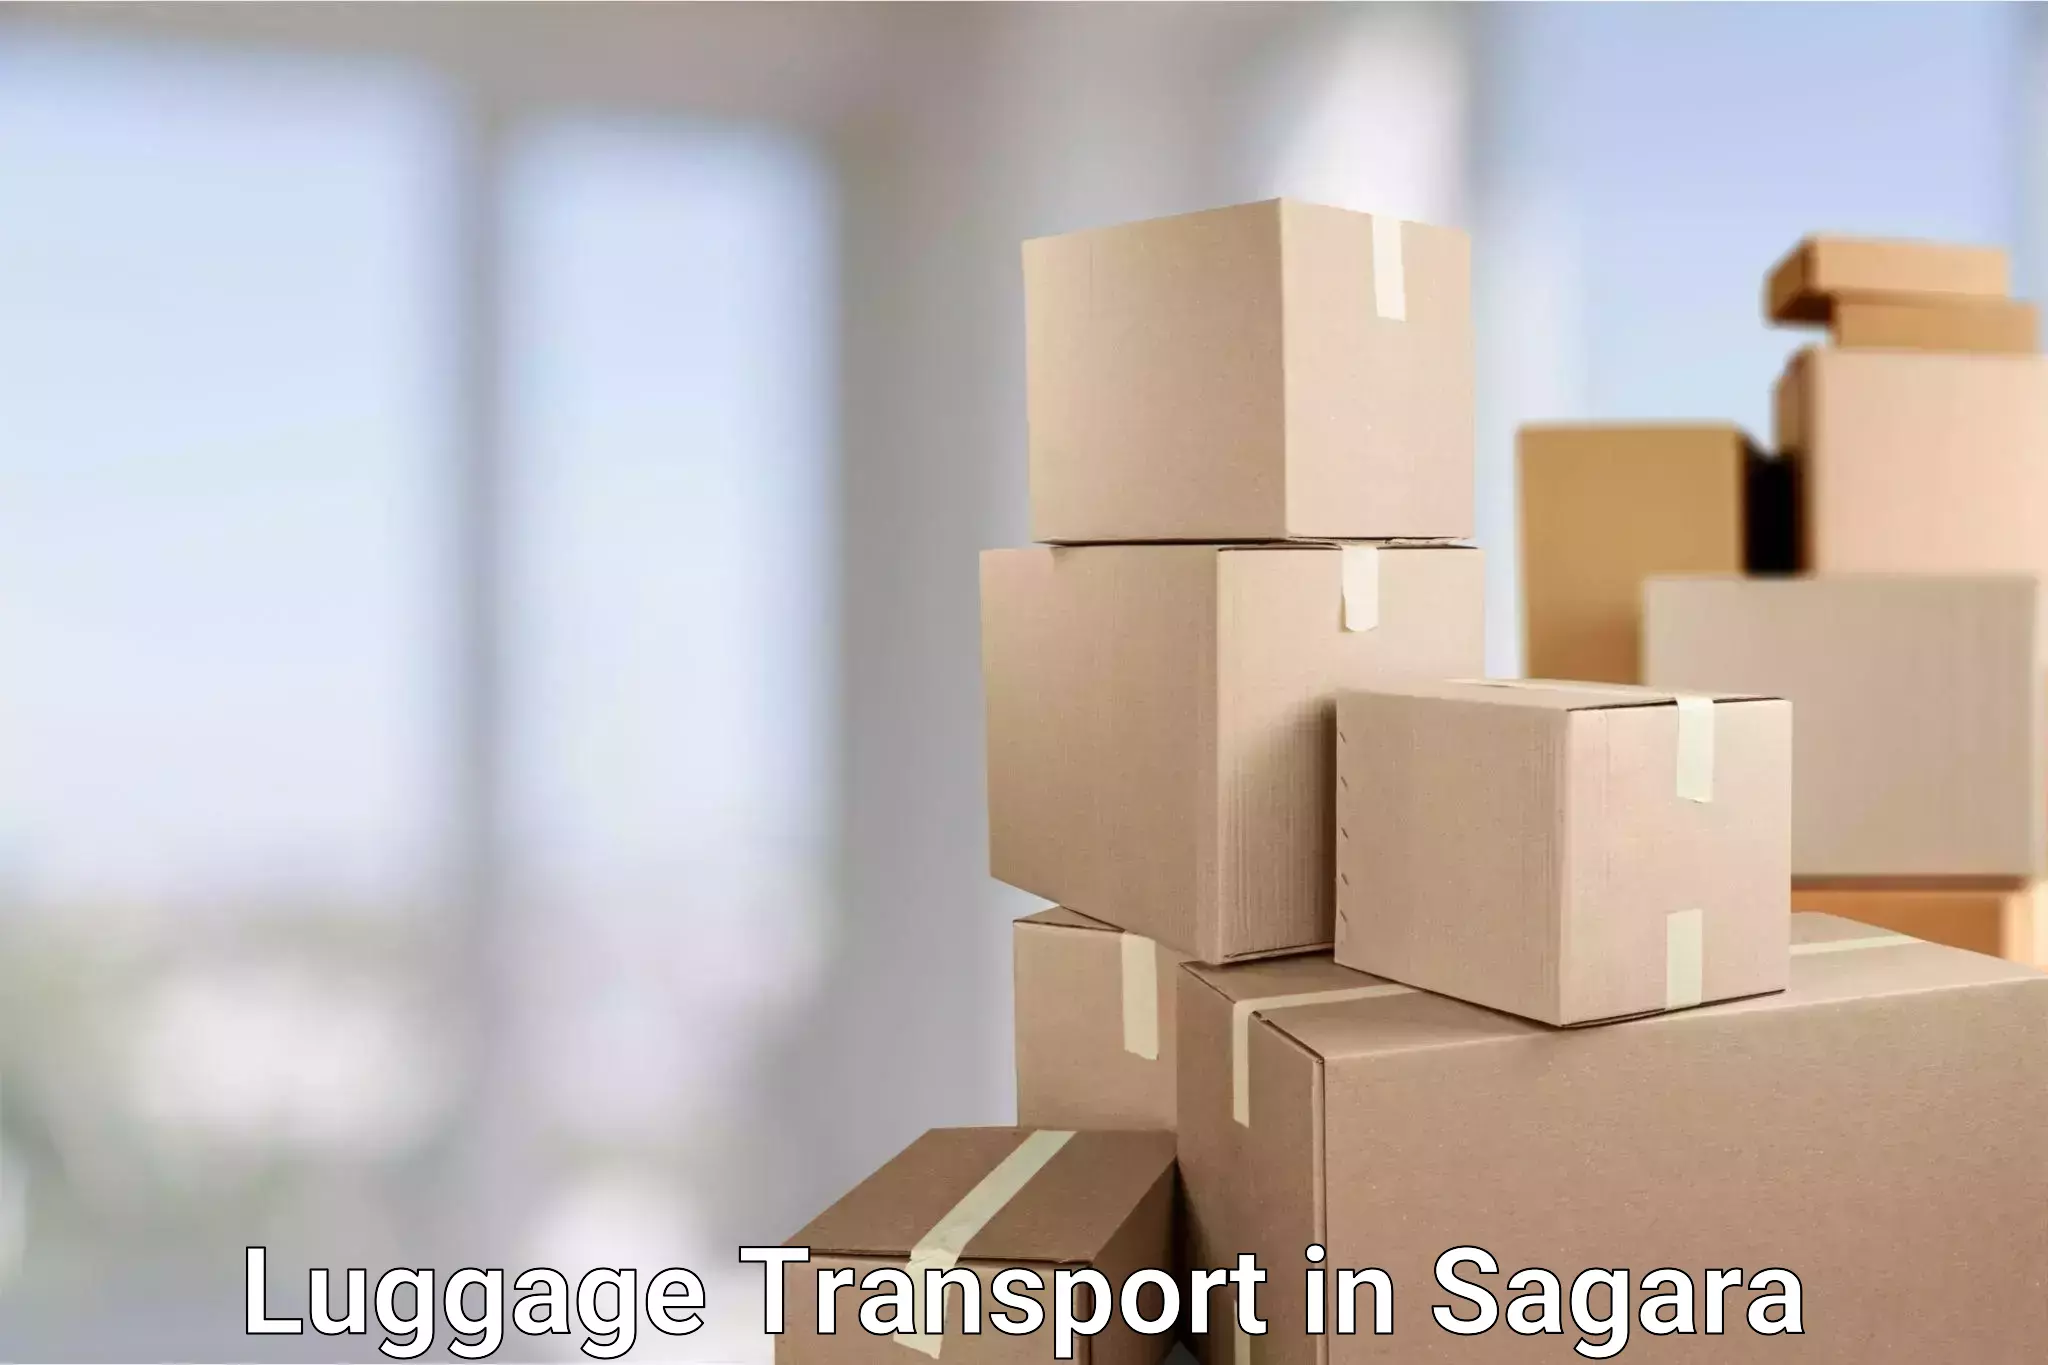 Luggage transfer service in Sagara